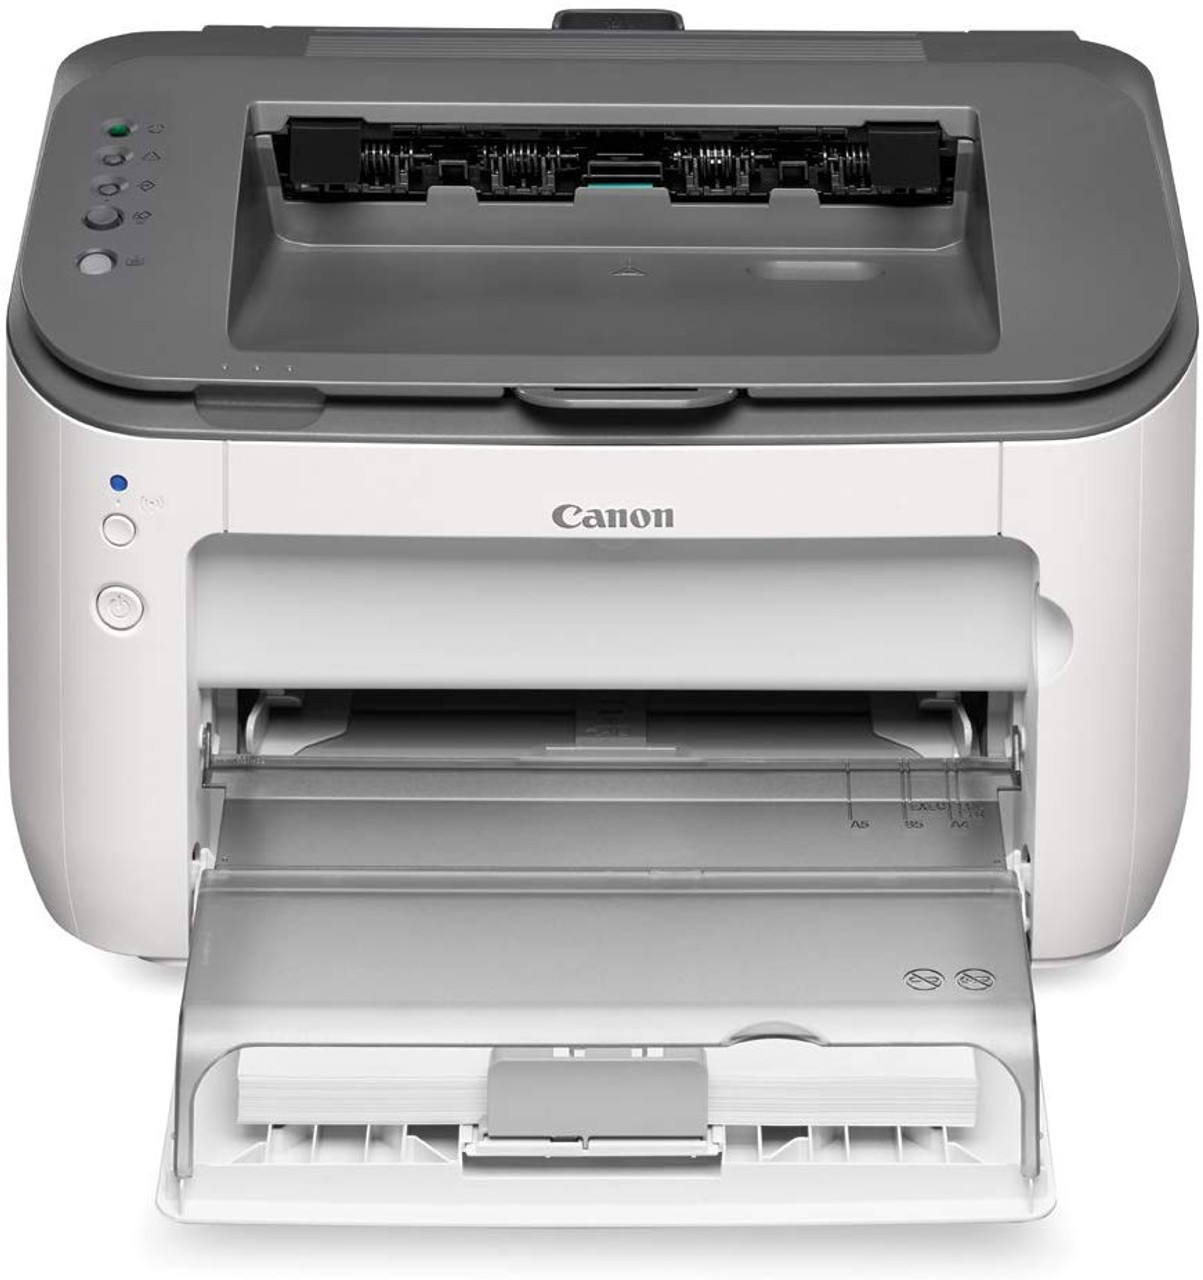 Canon imageCLASS Wireless Laser Printer